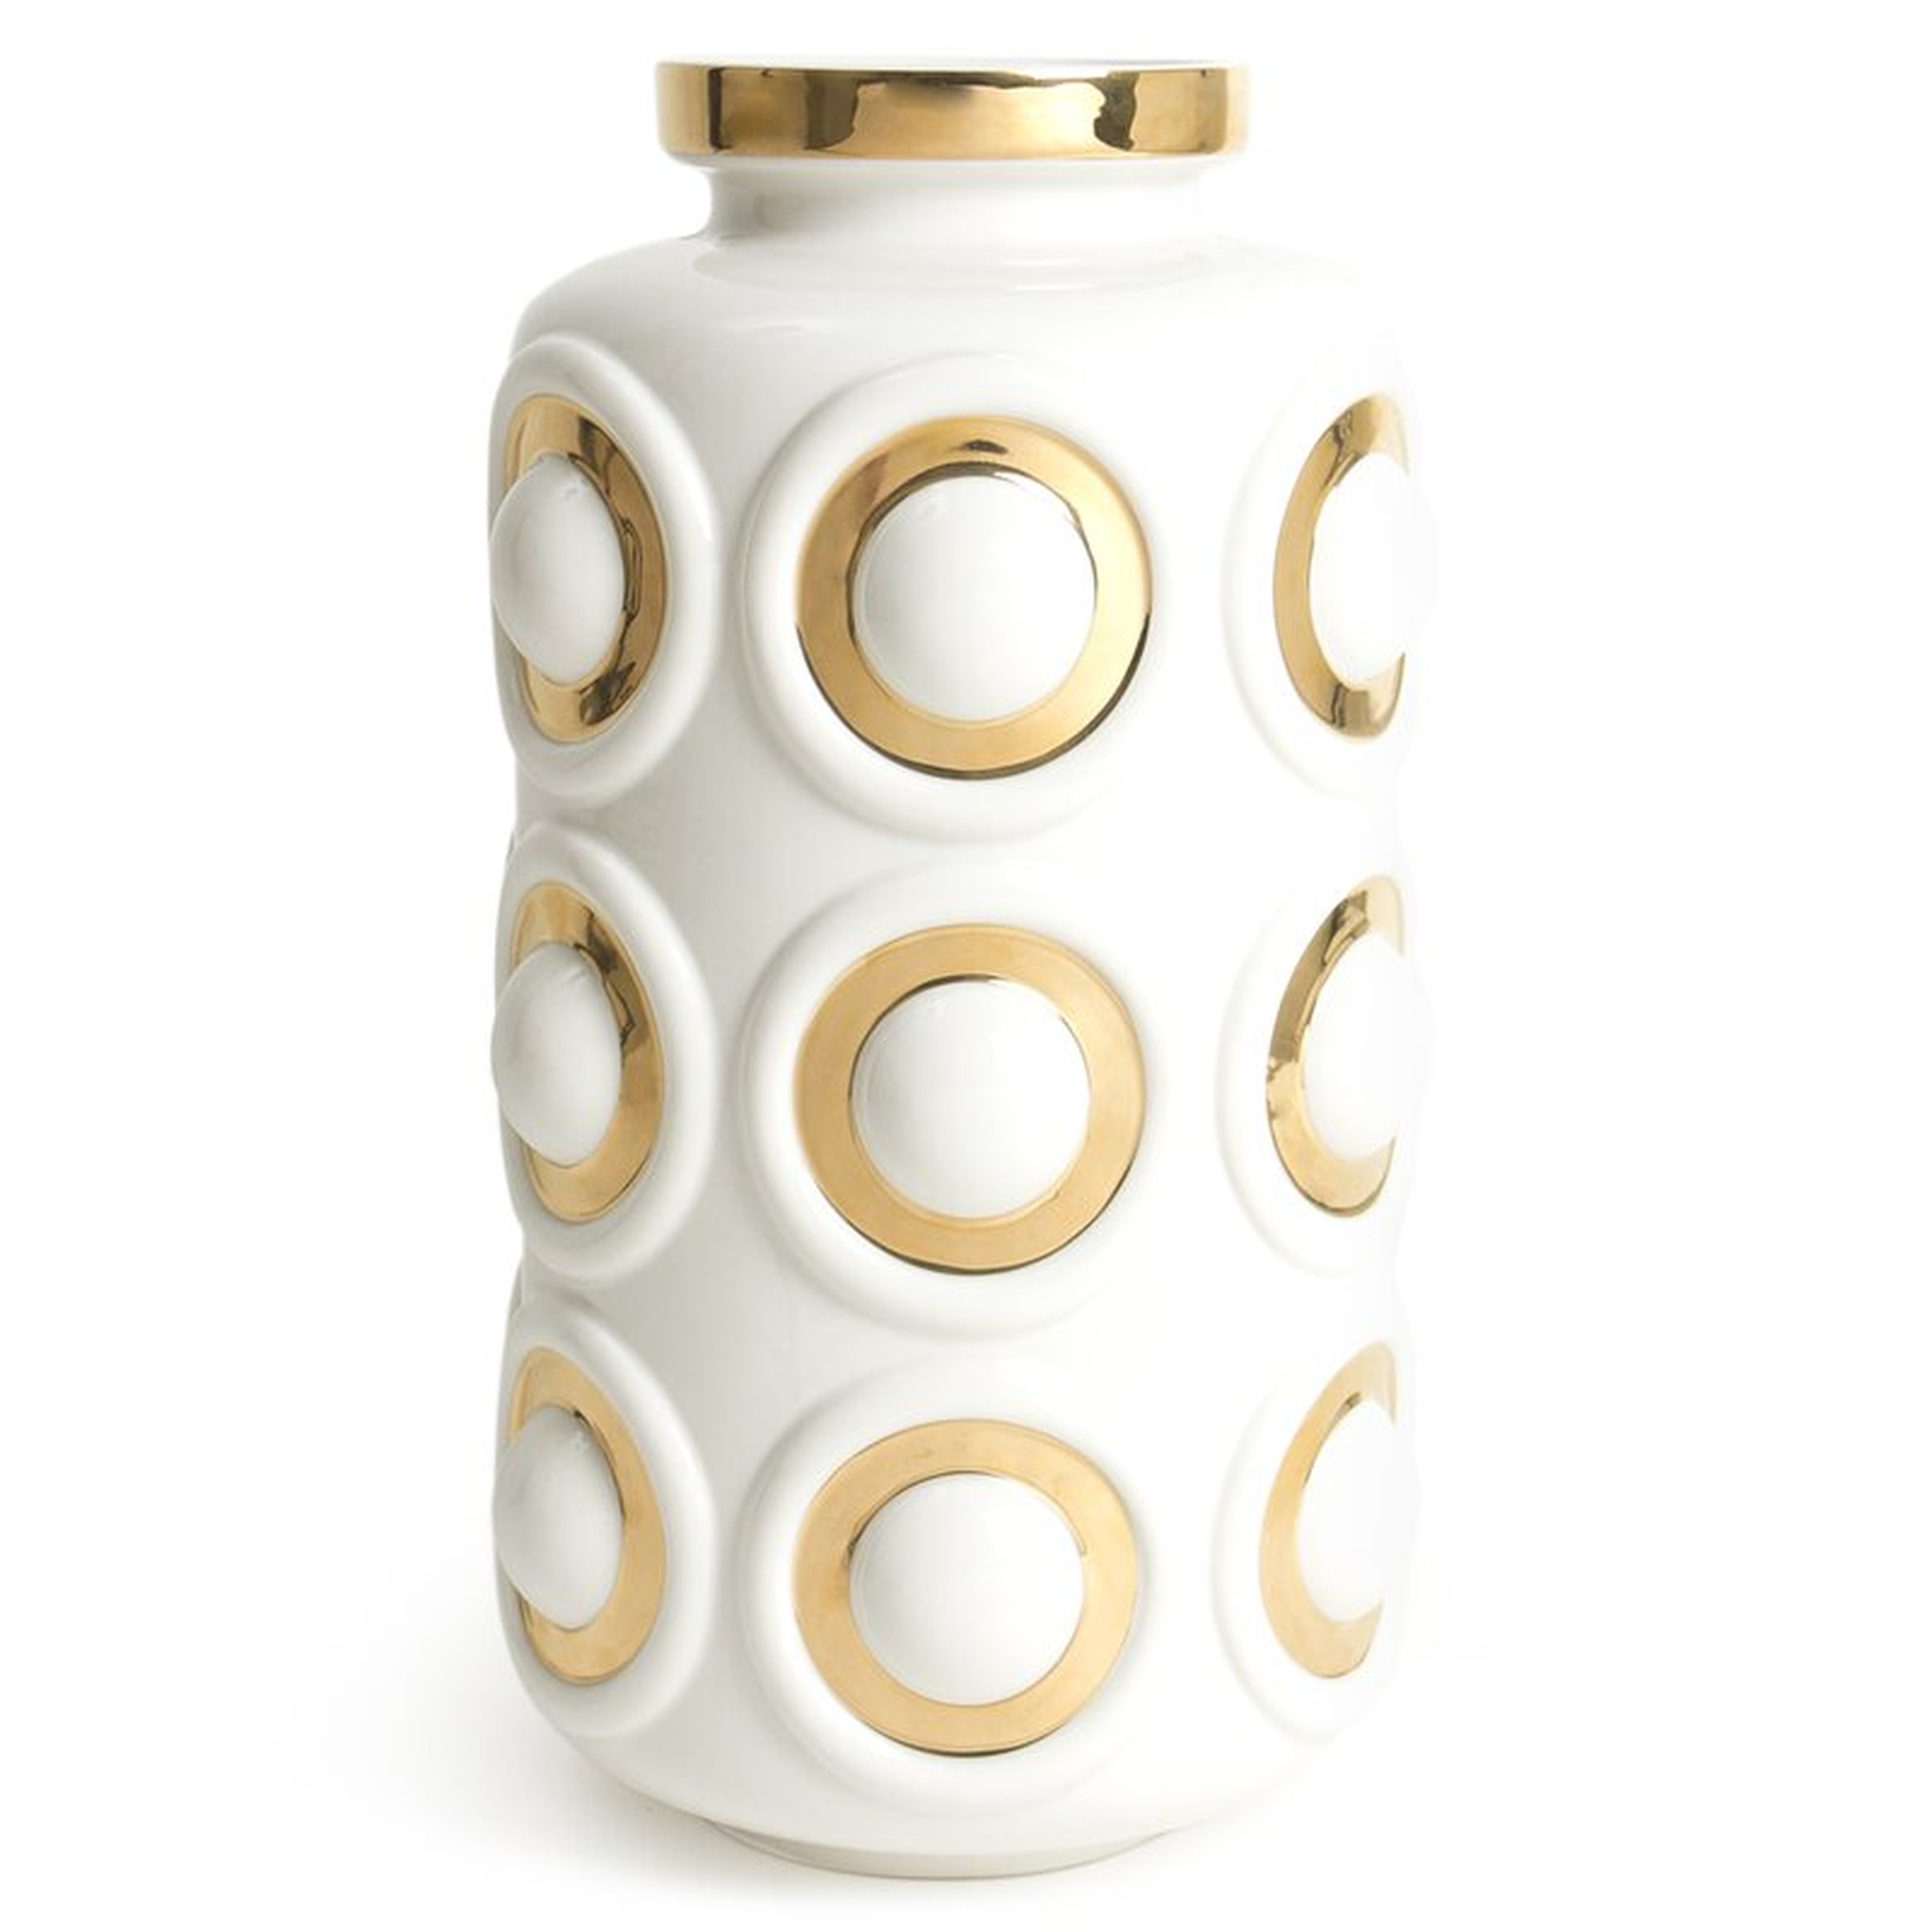 Jonathan Adler Futura White/Gold 12.75"" Porcelain Table Vase - Perigold